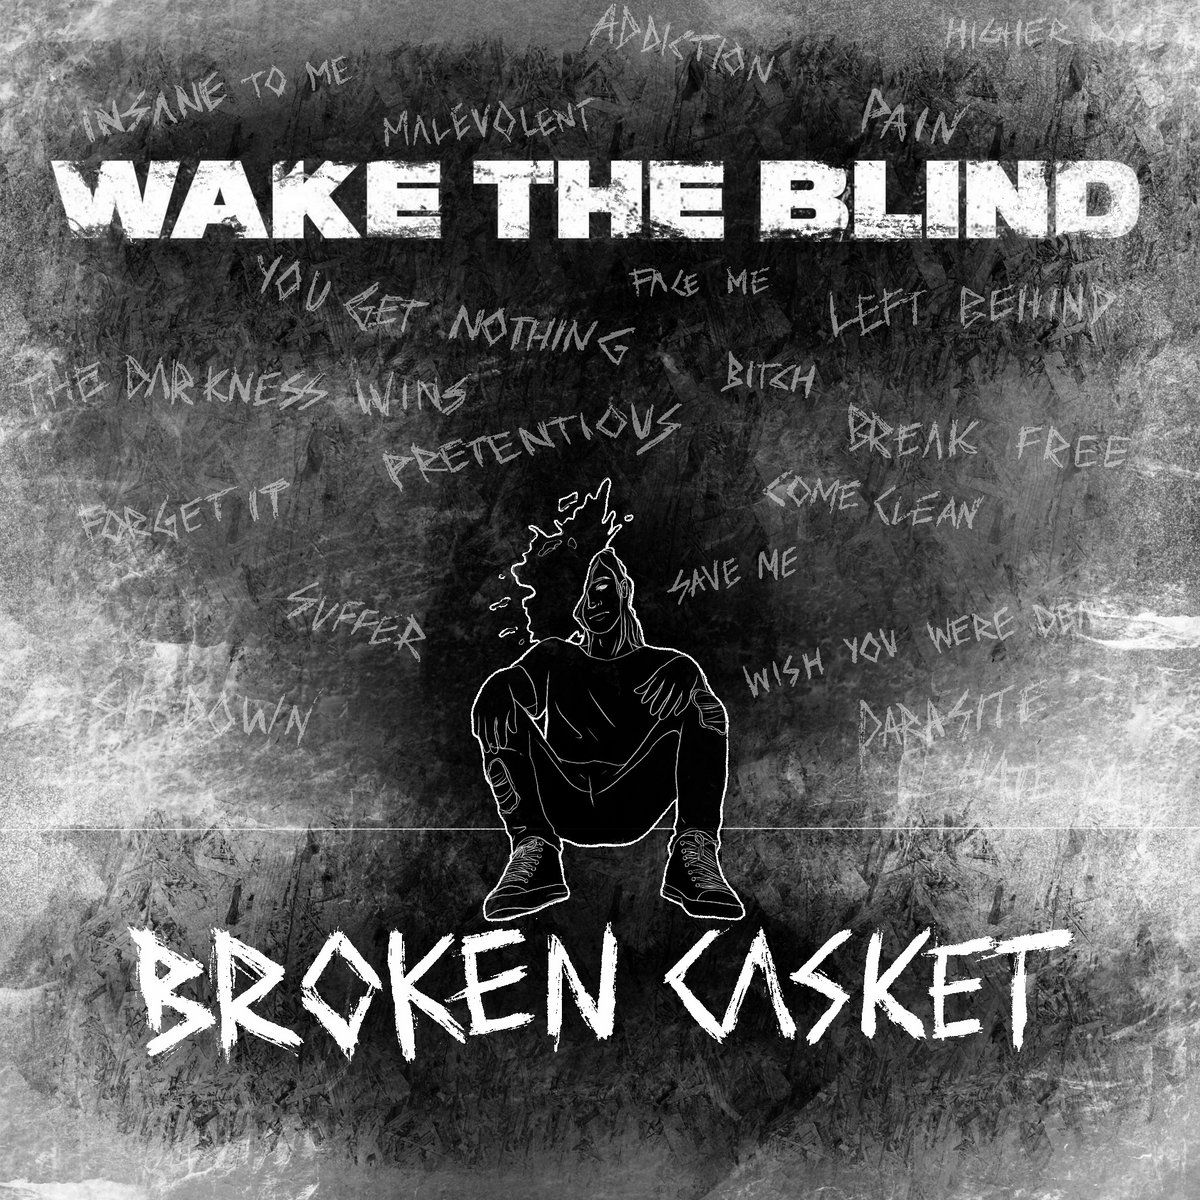 WAKE THE BLIND - Broken Casket cover 